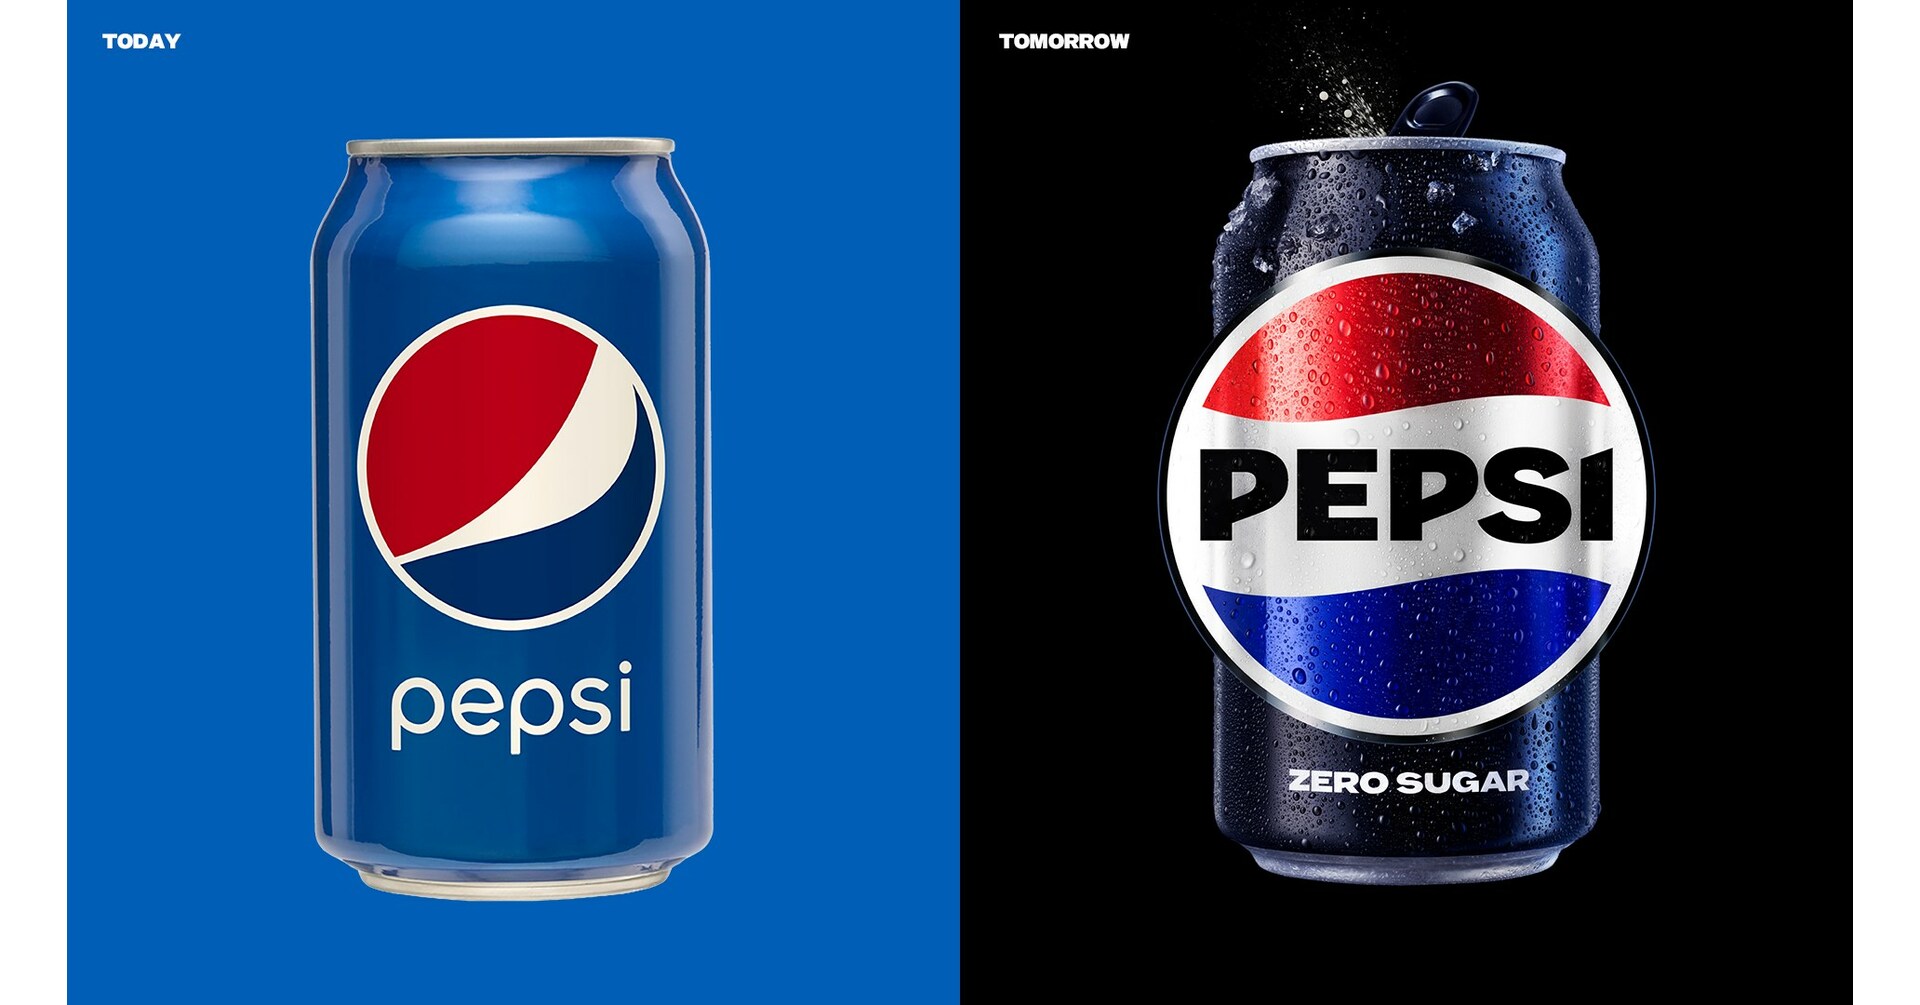 Pepsi unveils new logo, visual identity